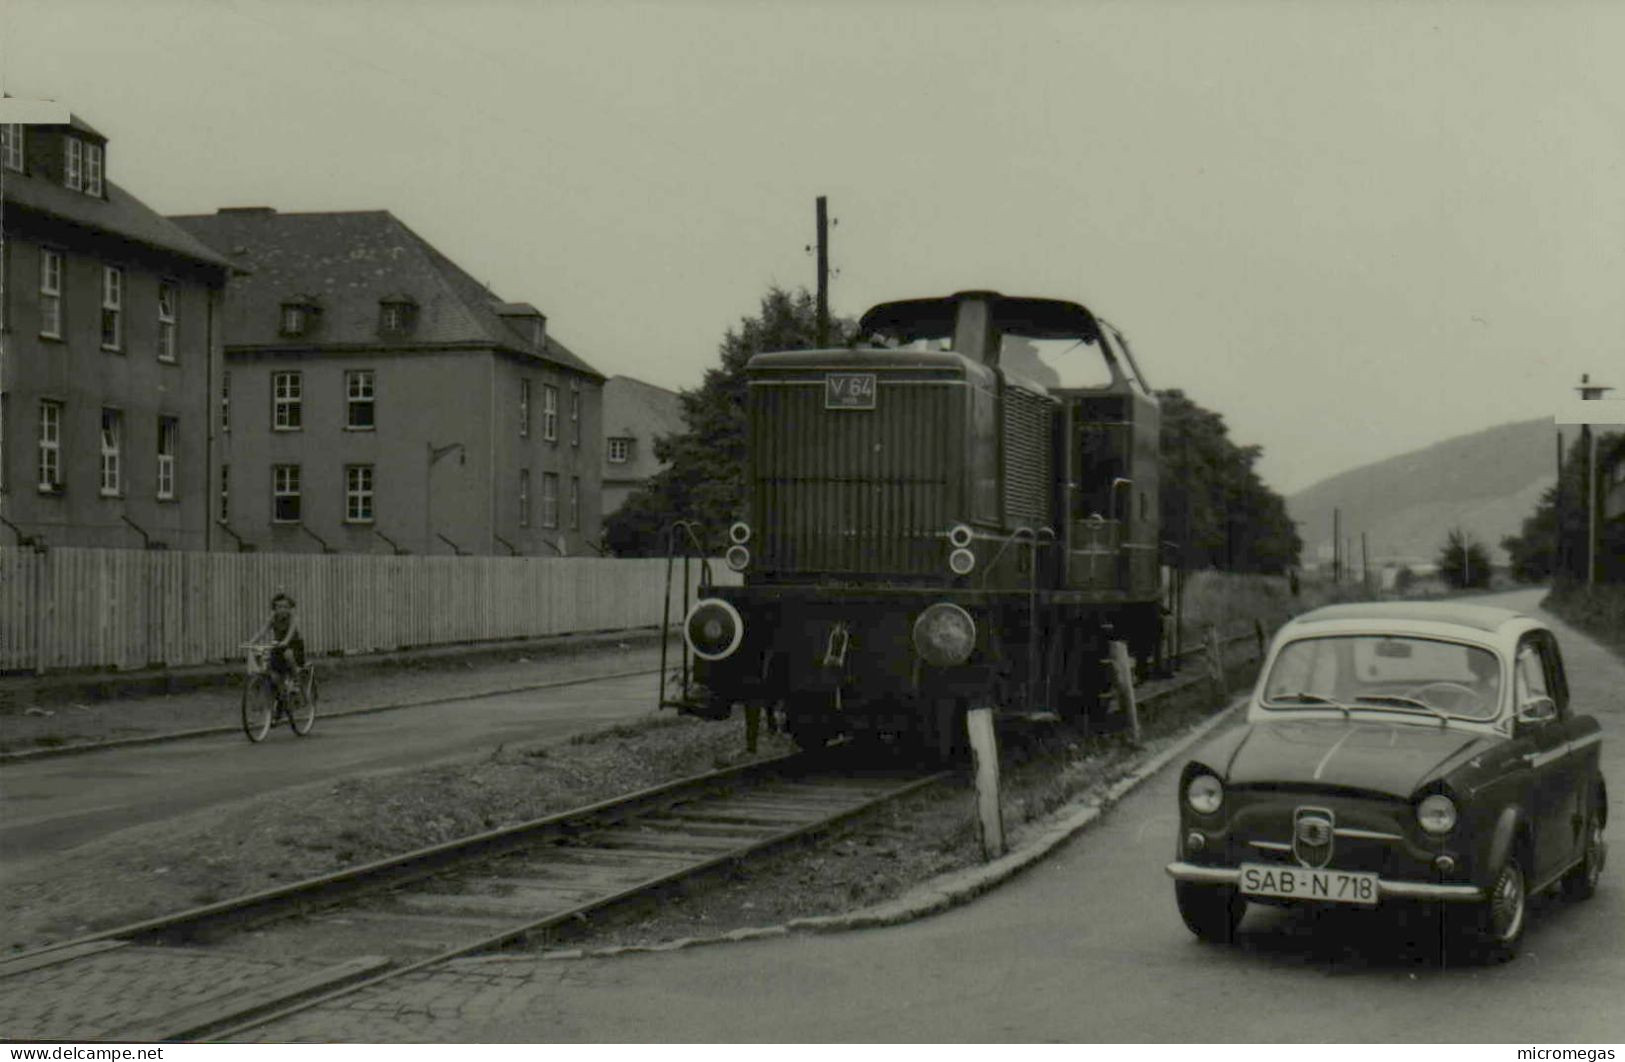 Reproduction - Moselbahn V 64, 1-8-1967 - Ternes